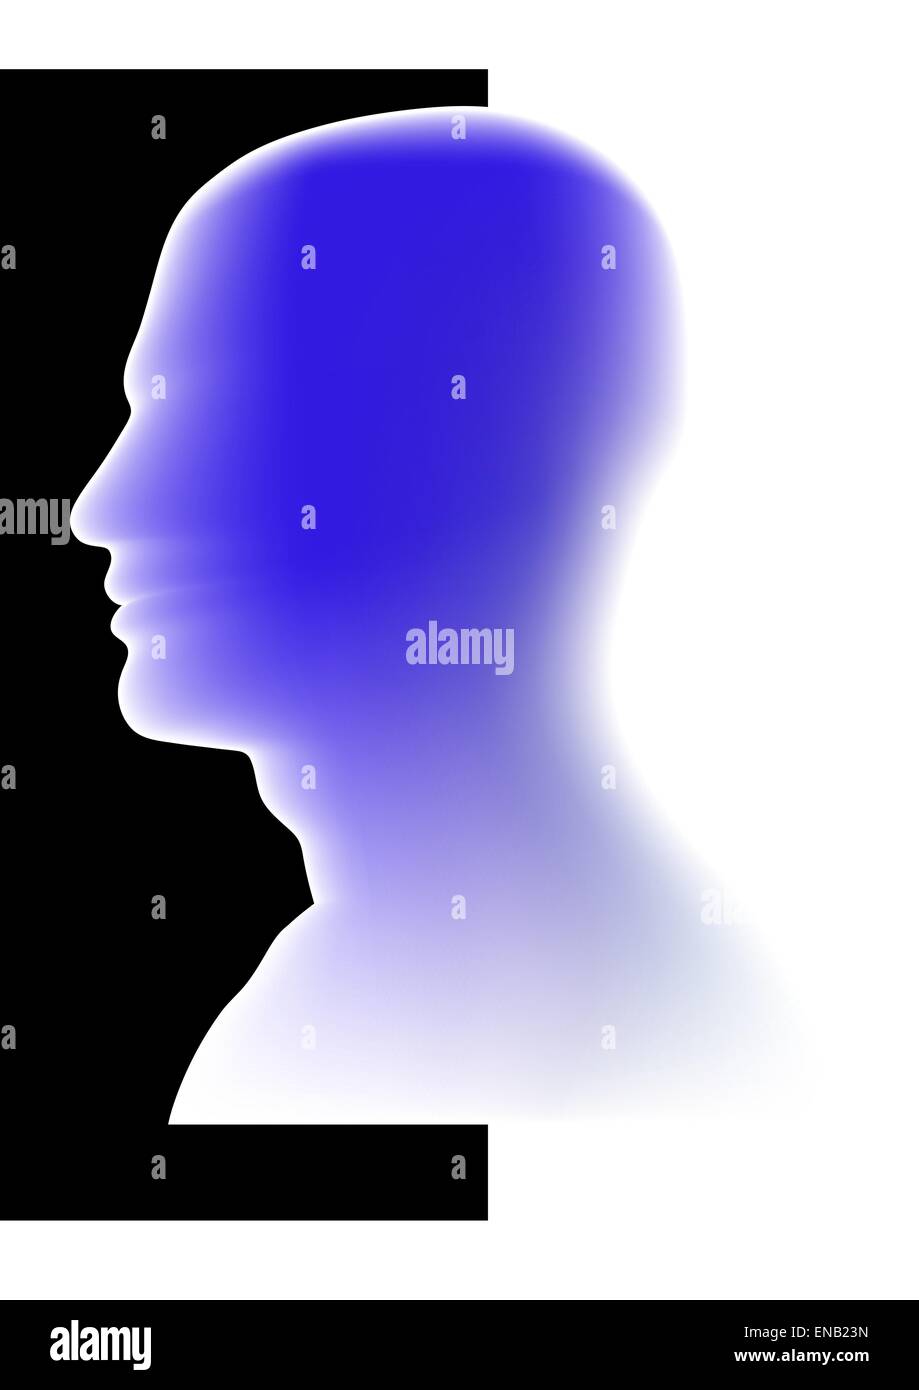 Abstraktes Bild - leuchtenden Kopf - Intelligenz - Idee Stock Vektor